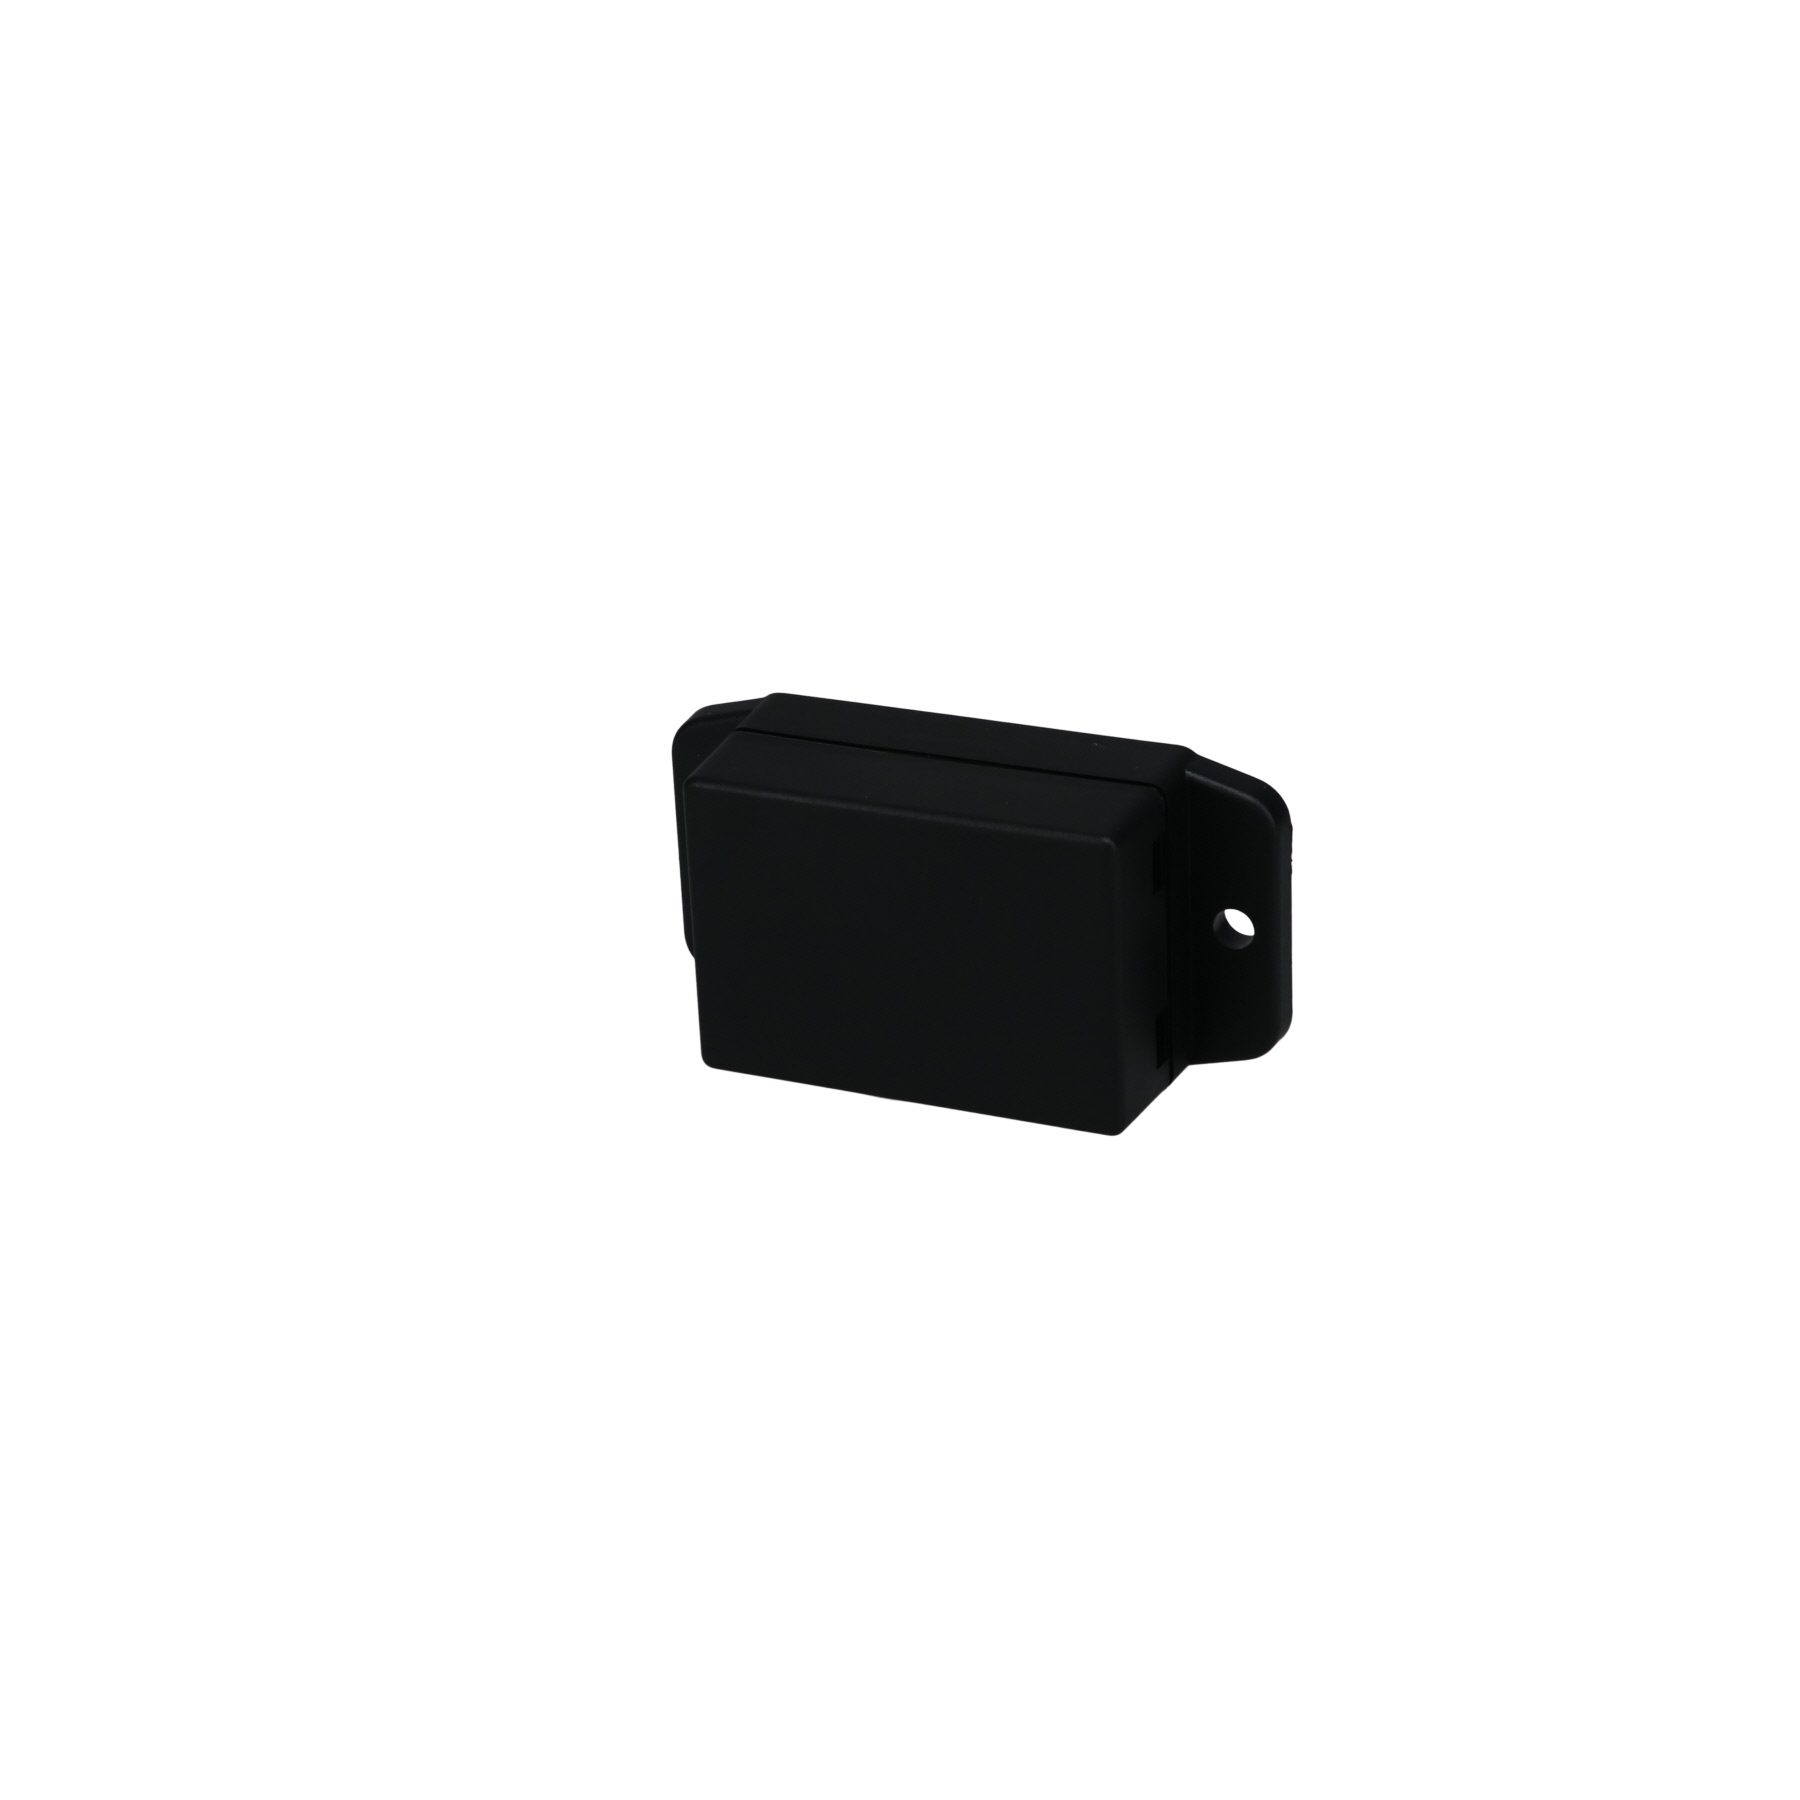 Snap Utility Box Black CU-18420-B